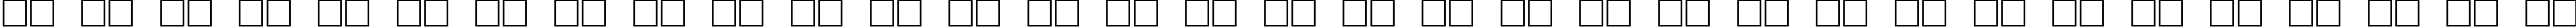 Пример написания русского алфавита шрифтом Tiffany